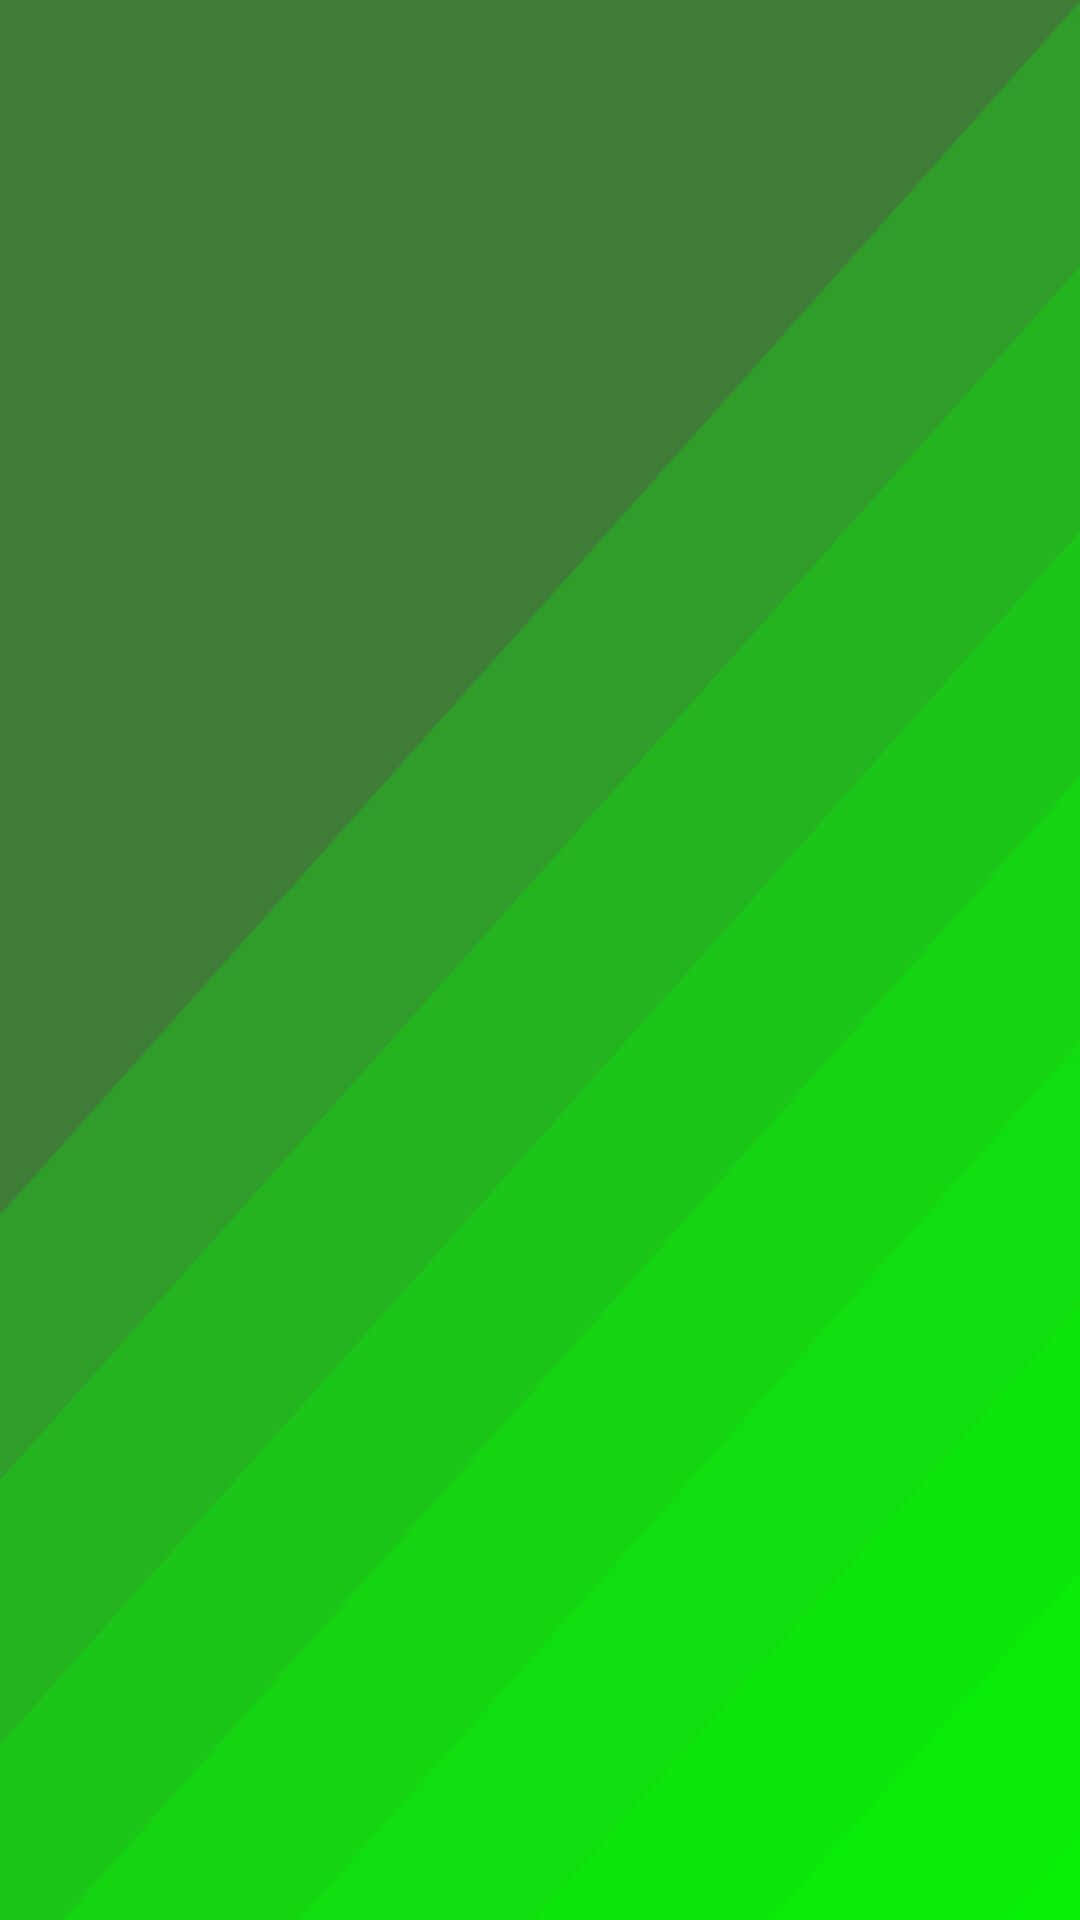 green gradient background hd